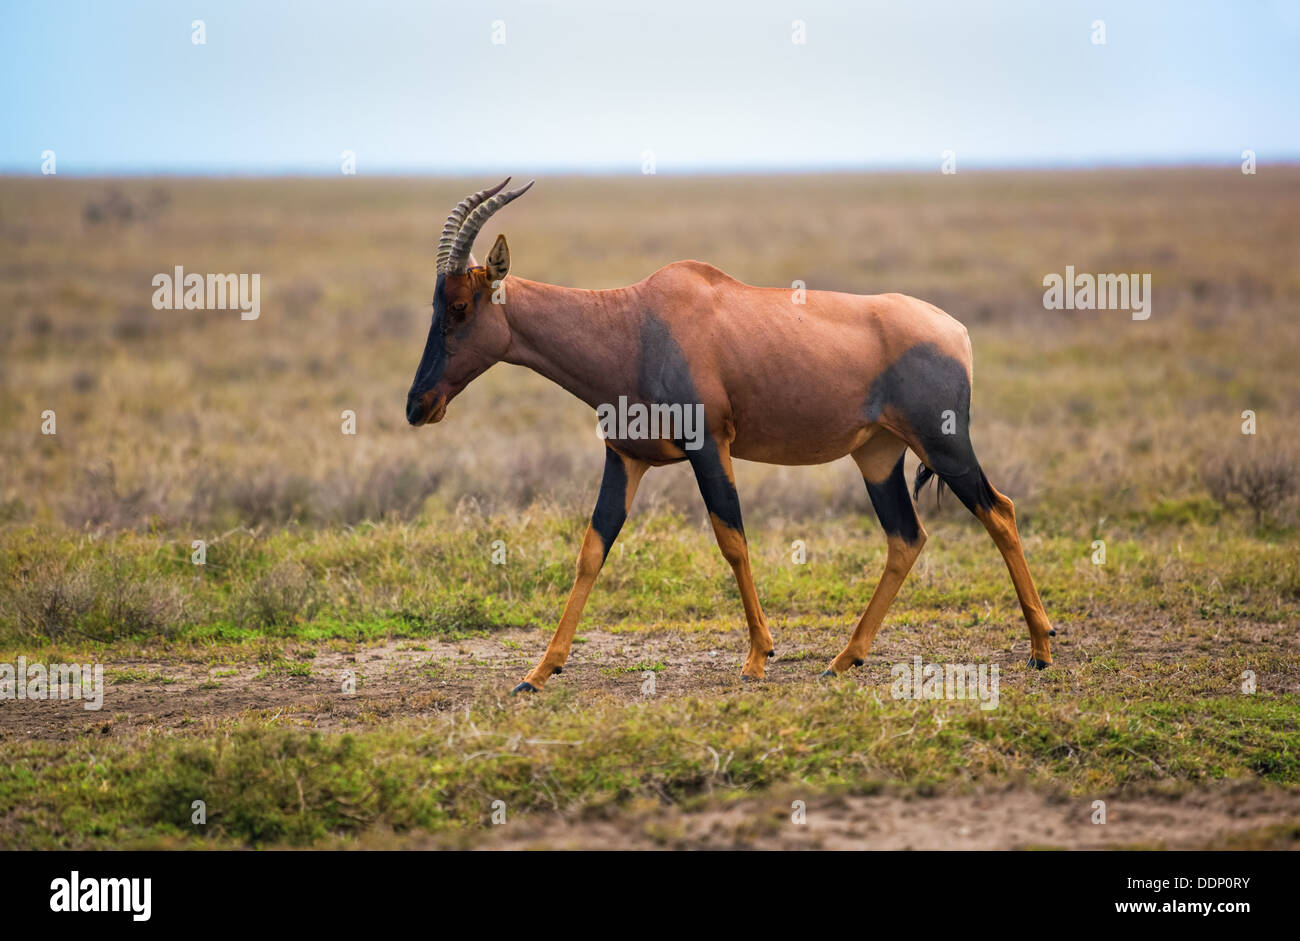 Topi, Damaliscus korrigum (antilope) dans le Serengeti National Park, Tanzania, Africa Banque D'Images